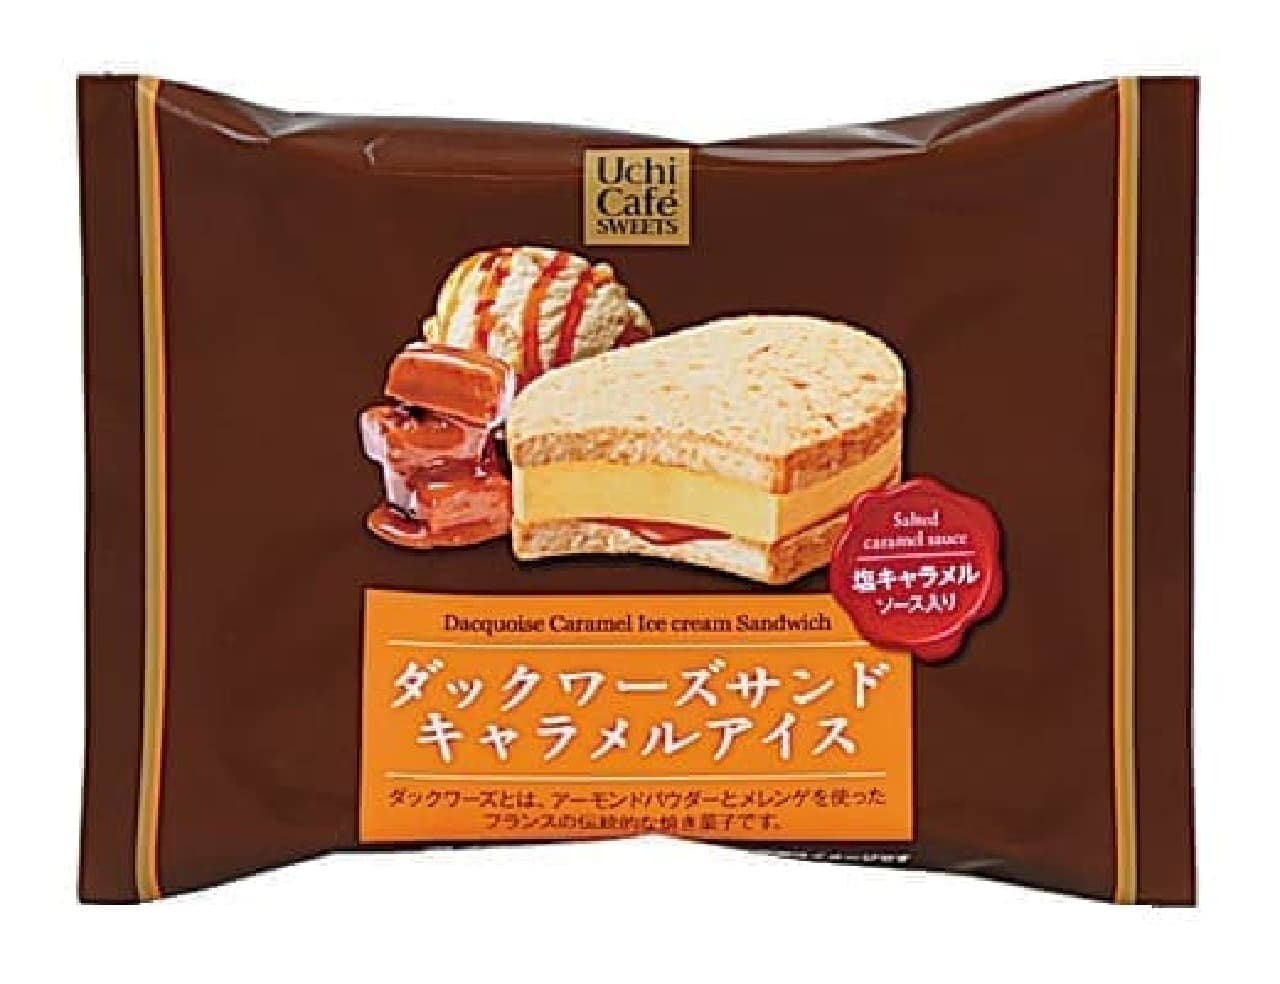 Uchi Cafe Duck Words Sandwich Caramel